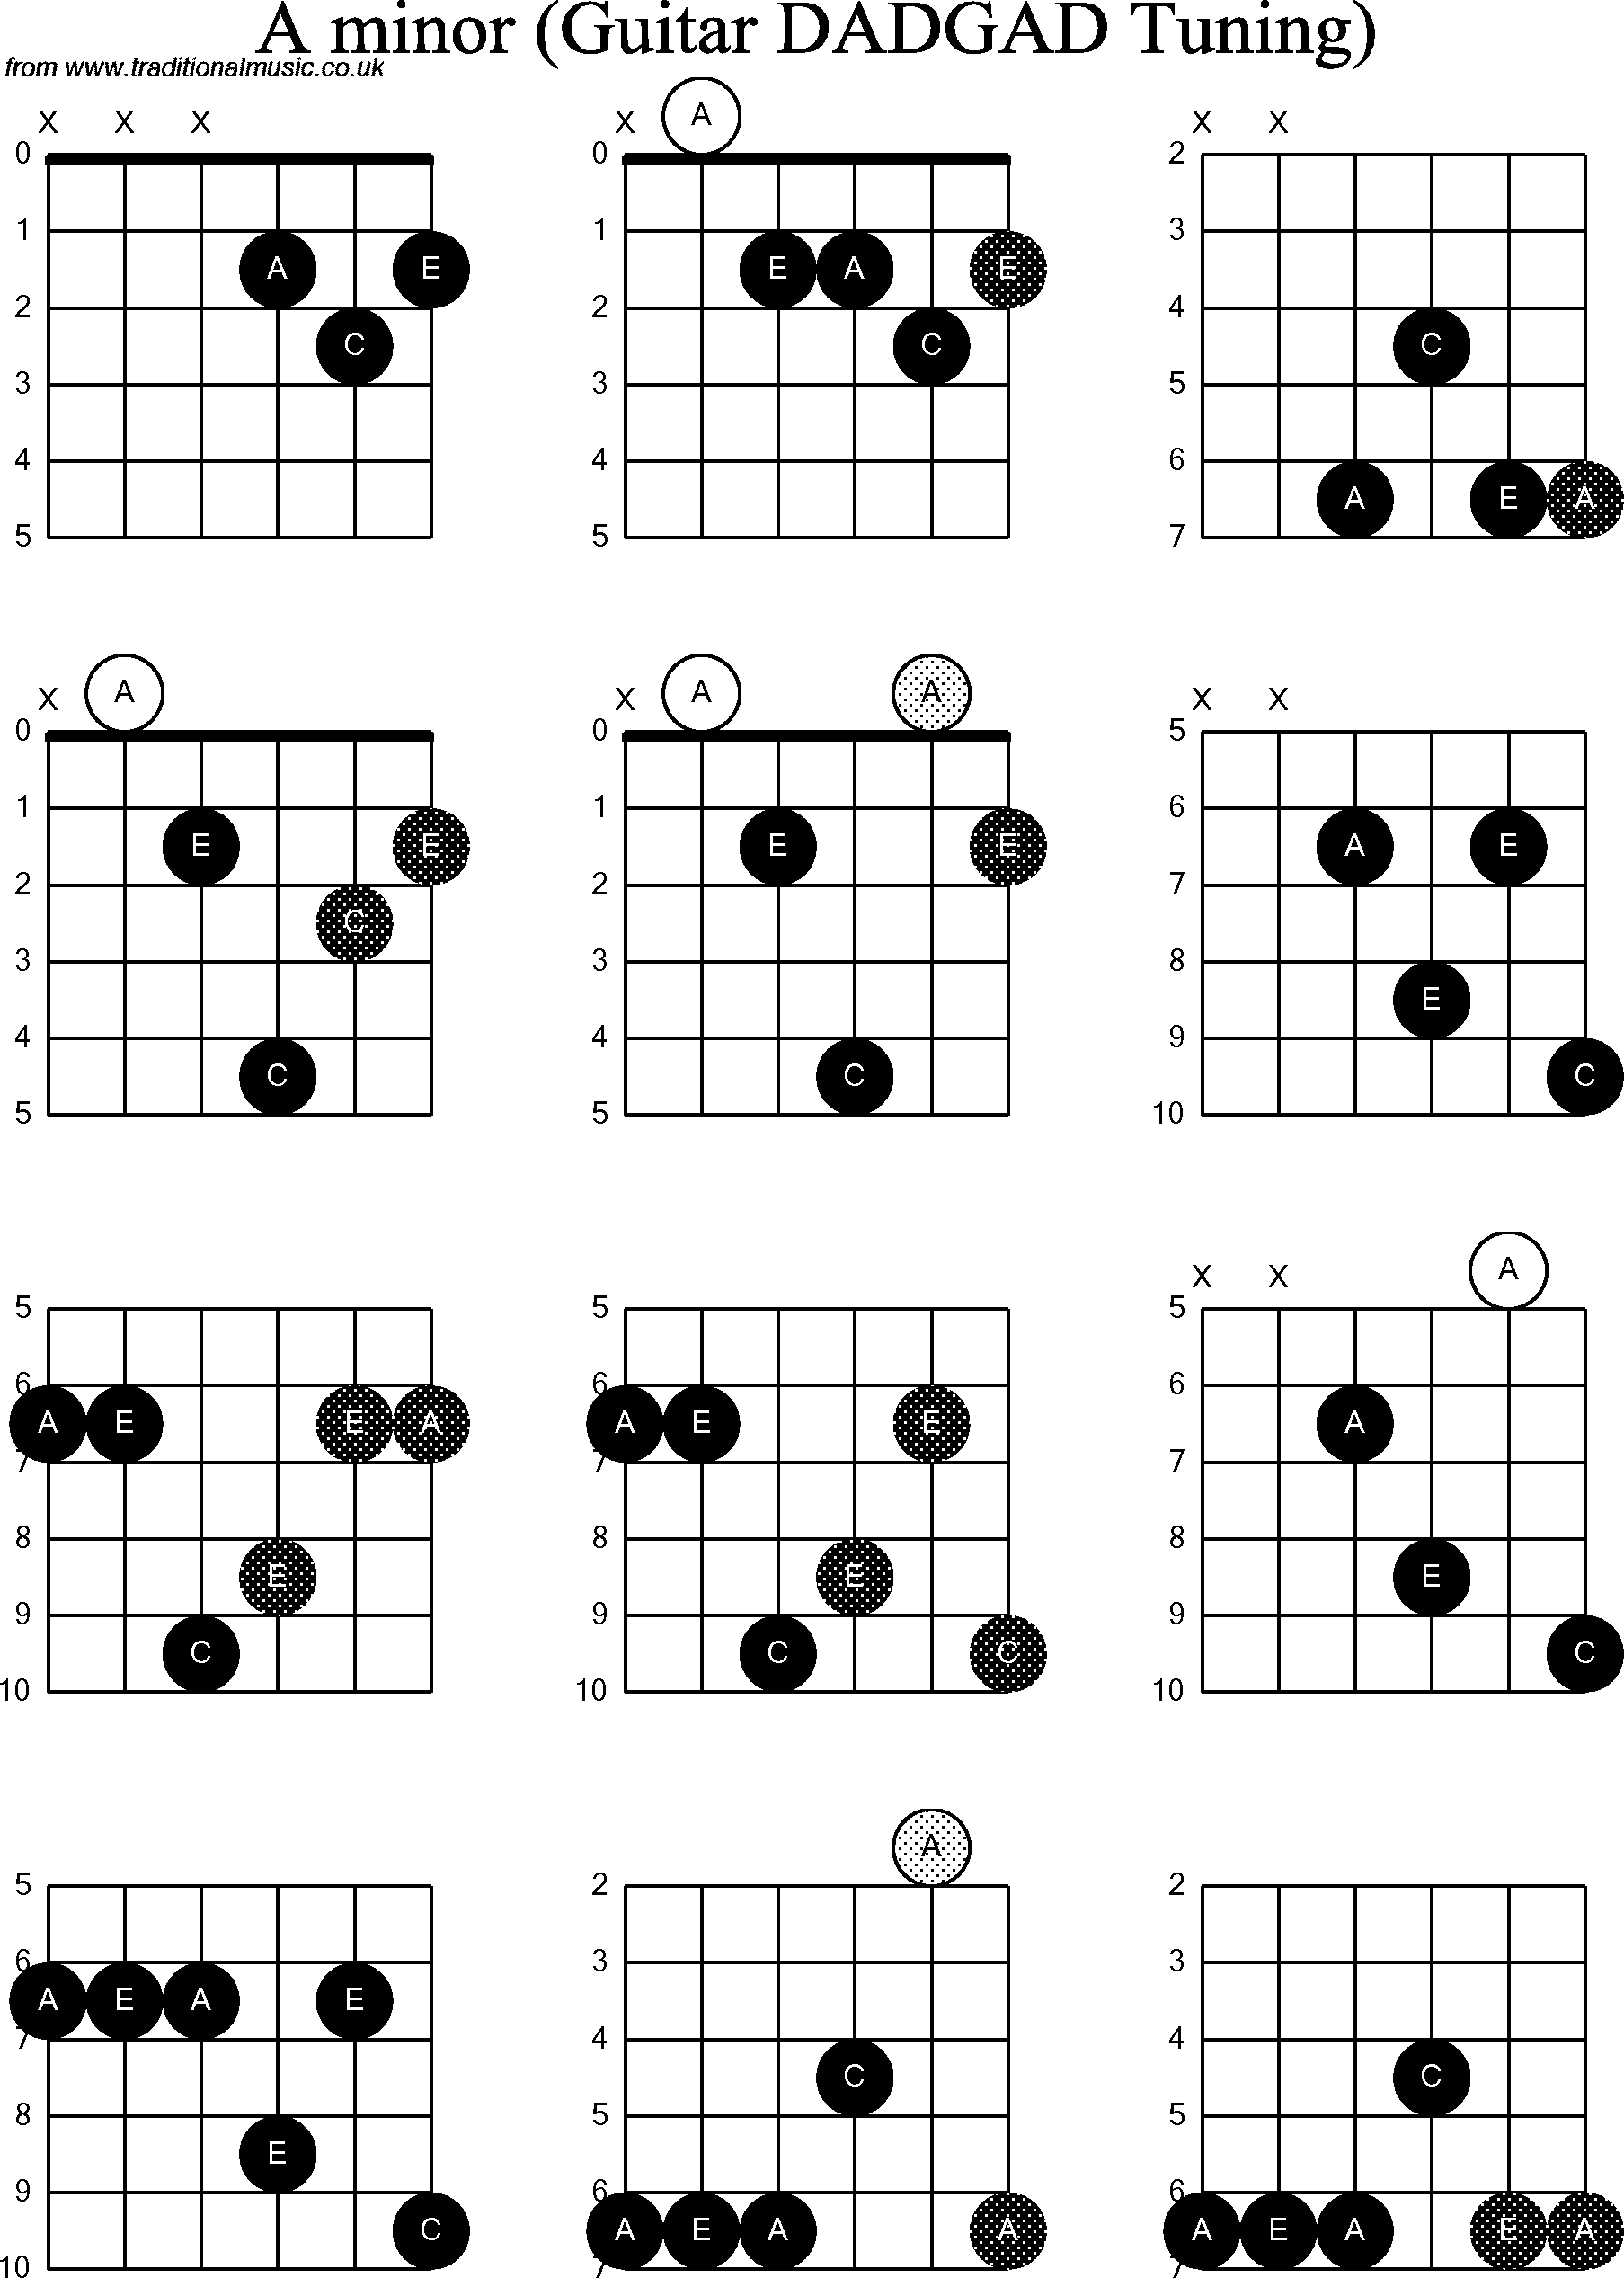 Chord Diagrams for D Modal Guitar(DADGAD), A Minor